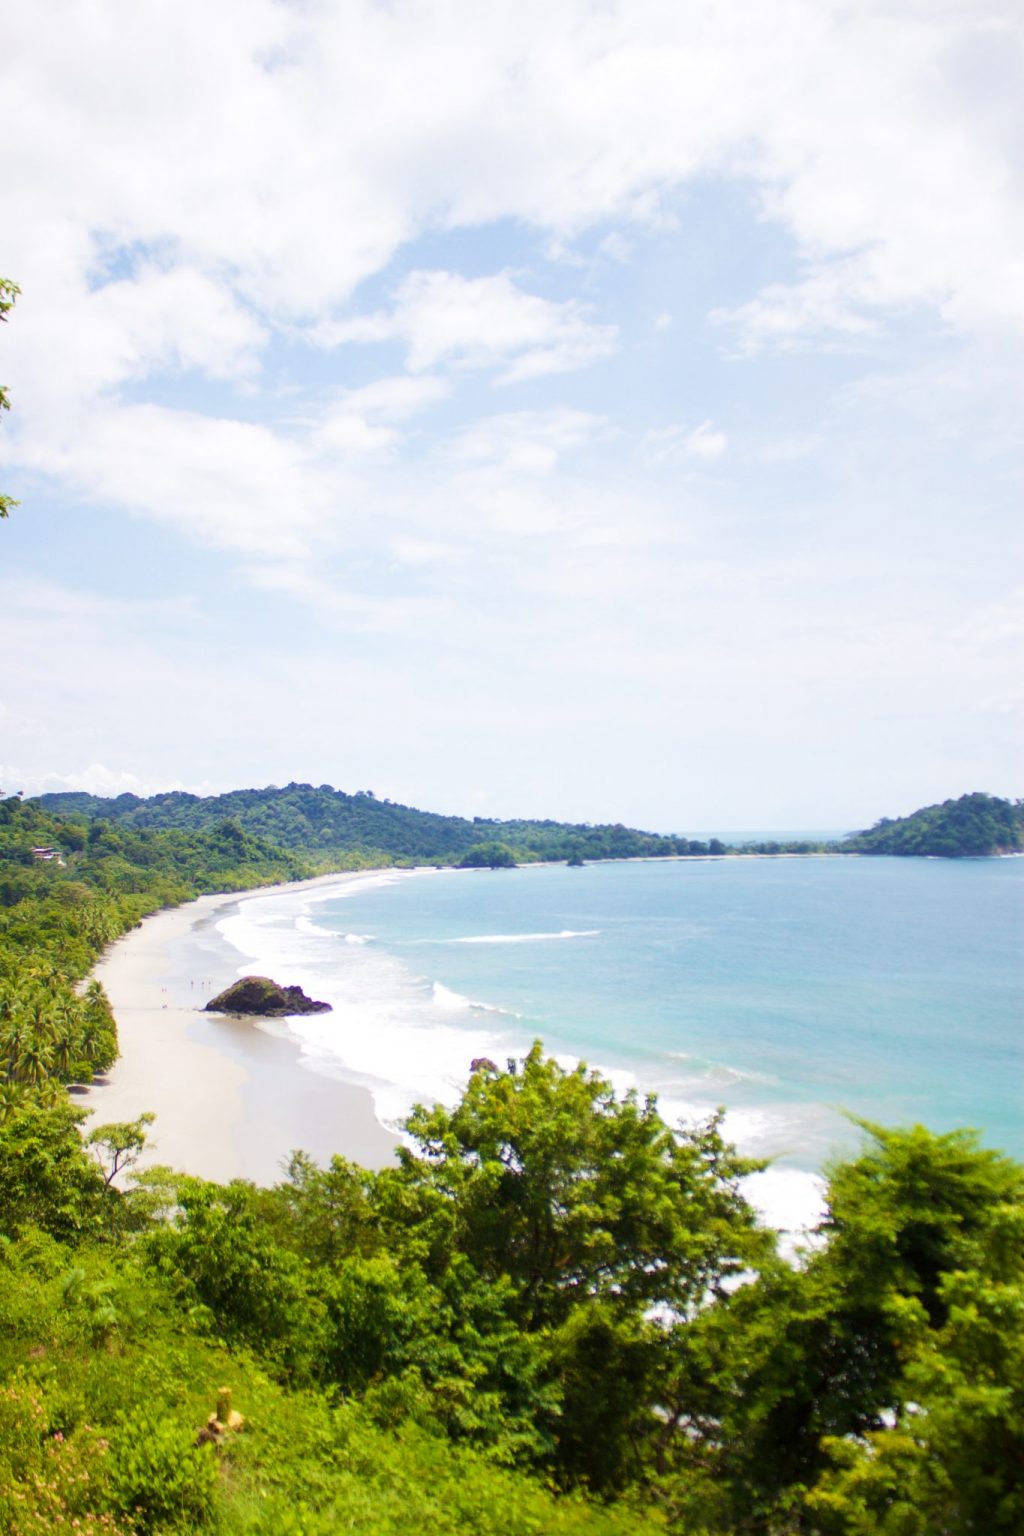 Costa Rica, pura vida, travel blogger, beach lifestyle, central america, costa rica travel tips, paradise, beach vacation ideas, rainforest